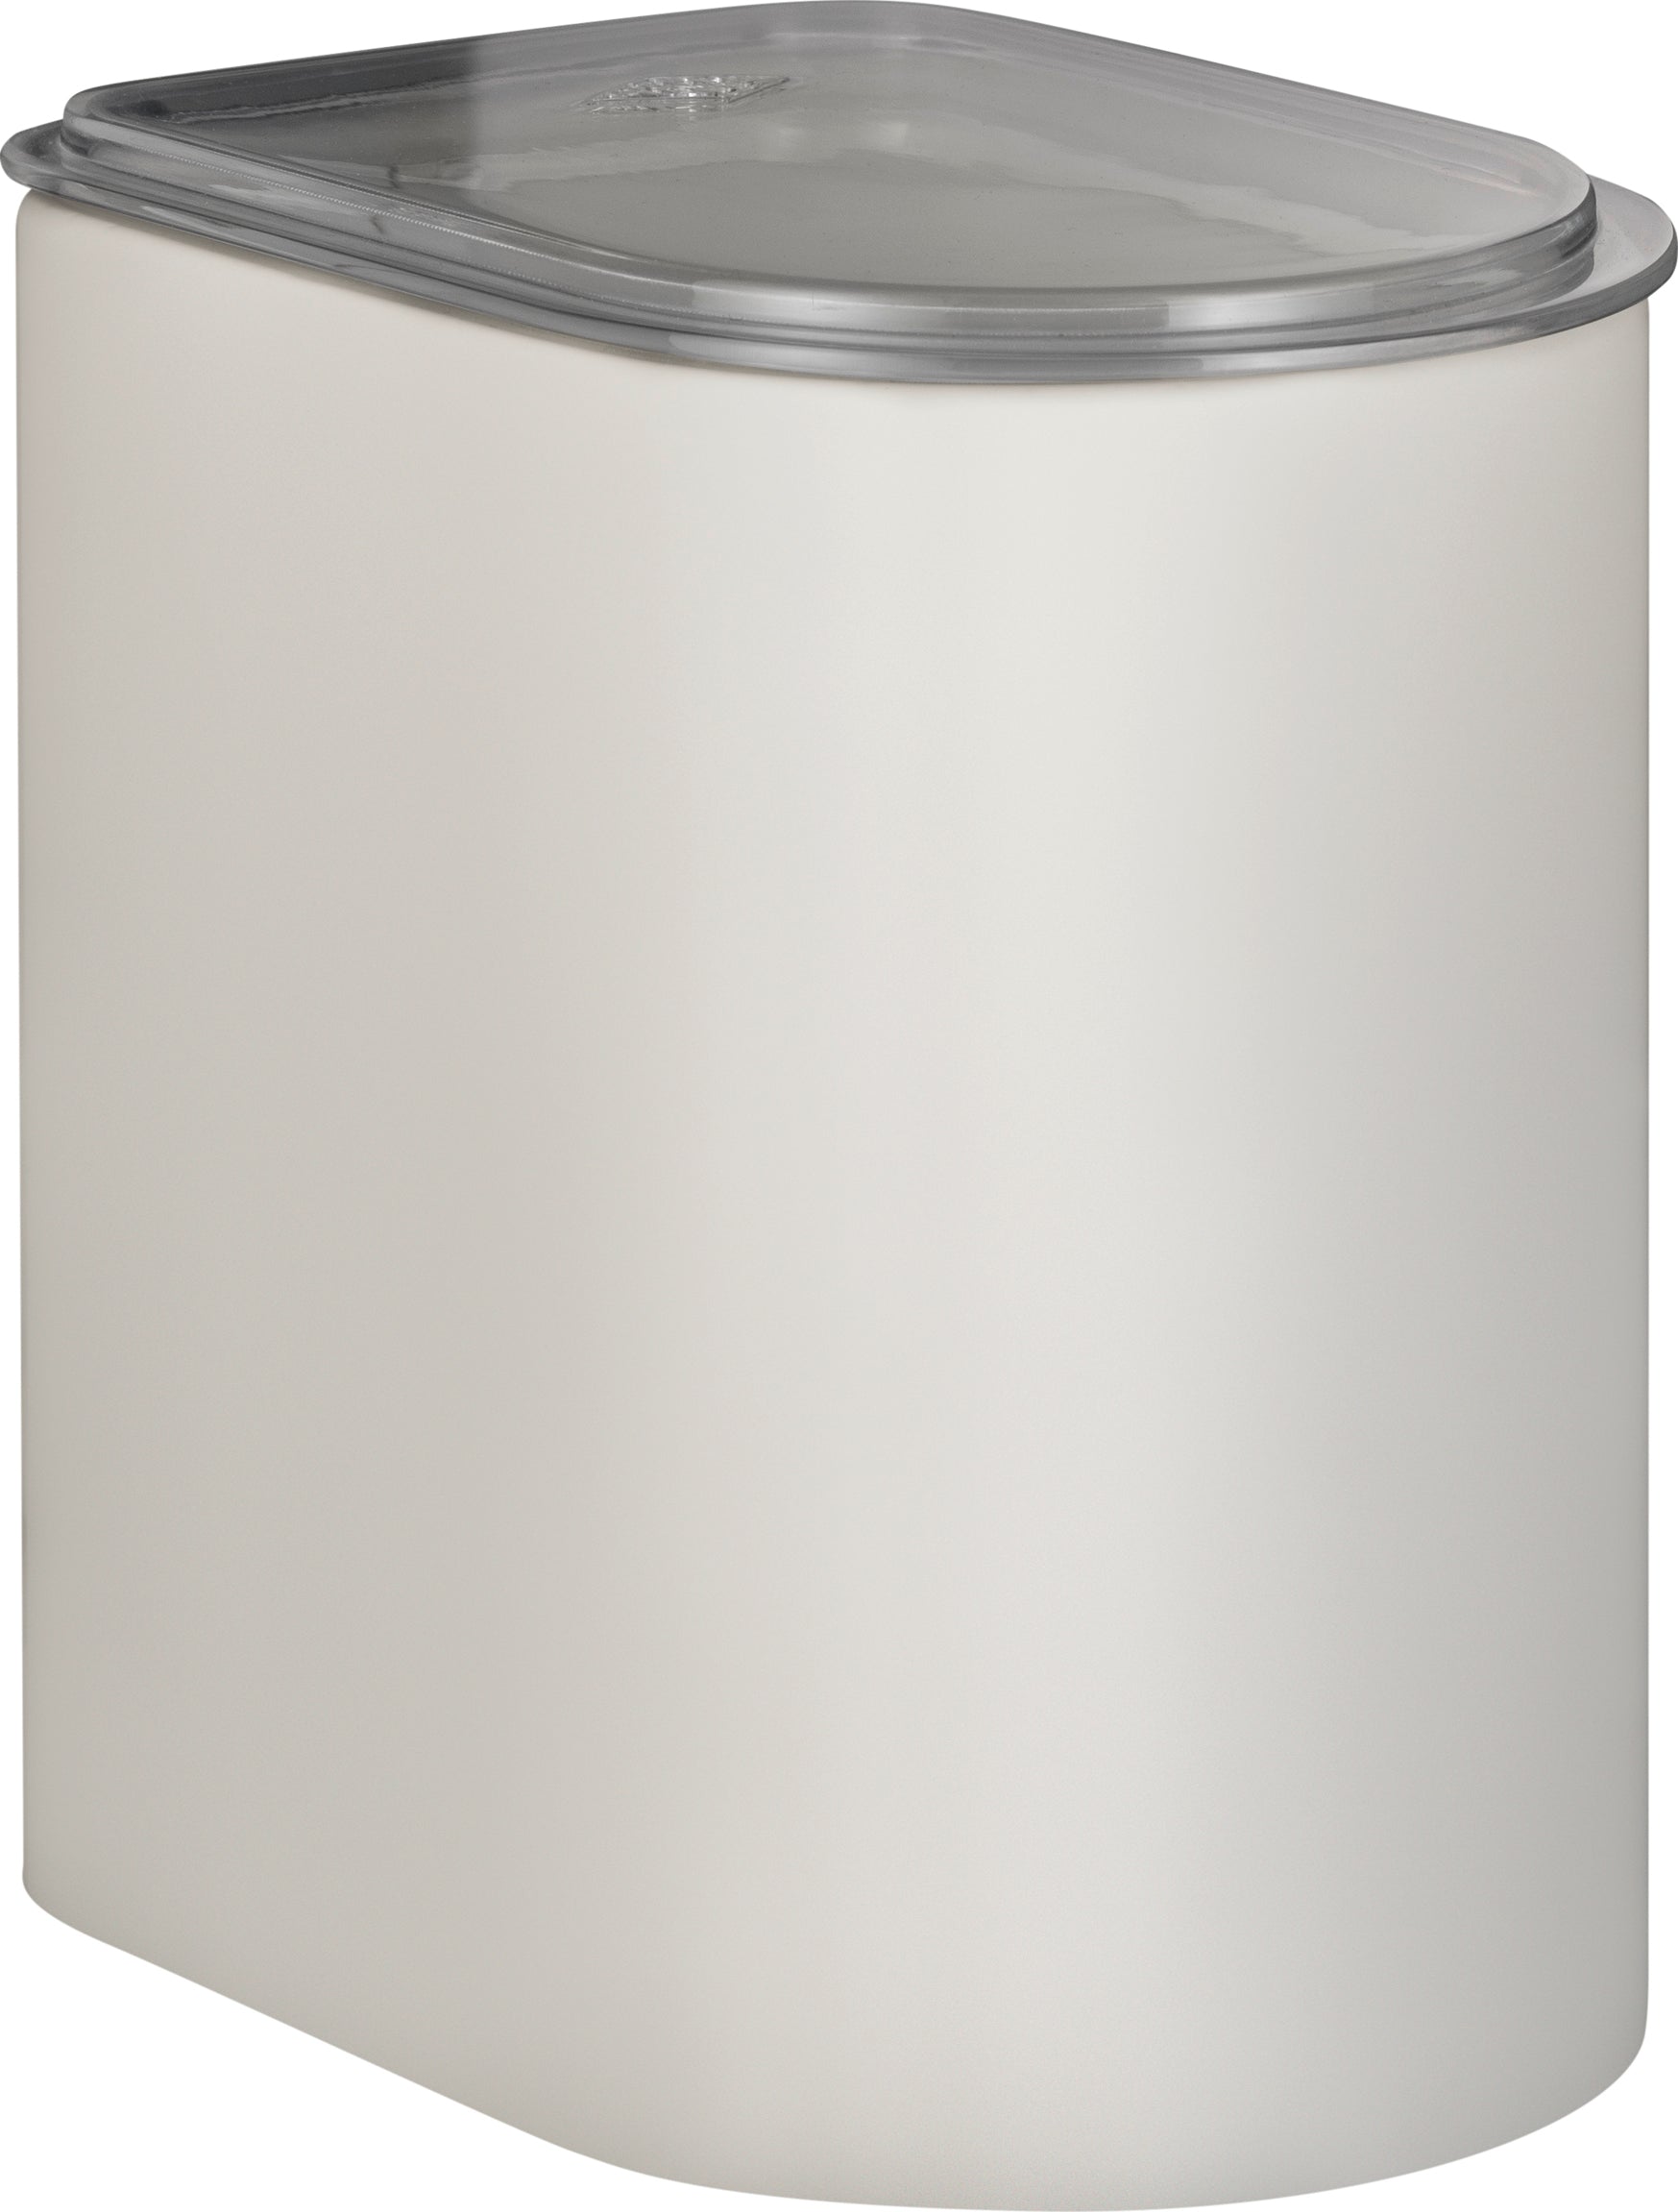 Wesco Canister 2,2 litro con tapa acrílica, Matt Sand